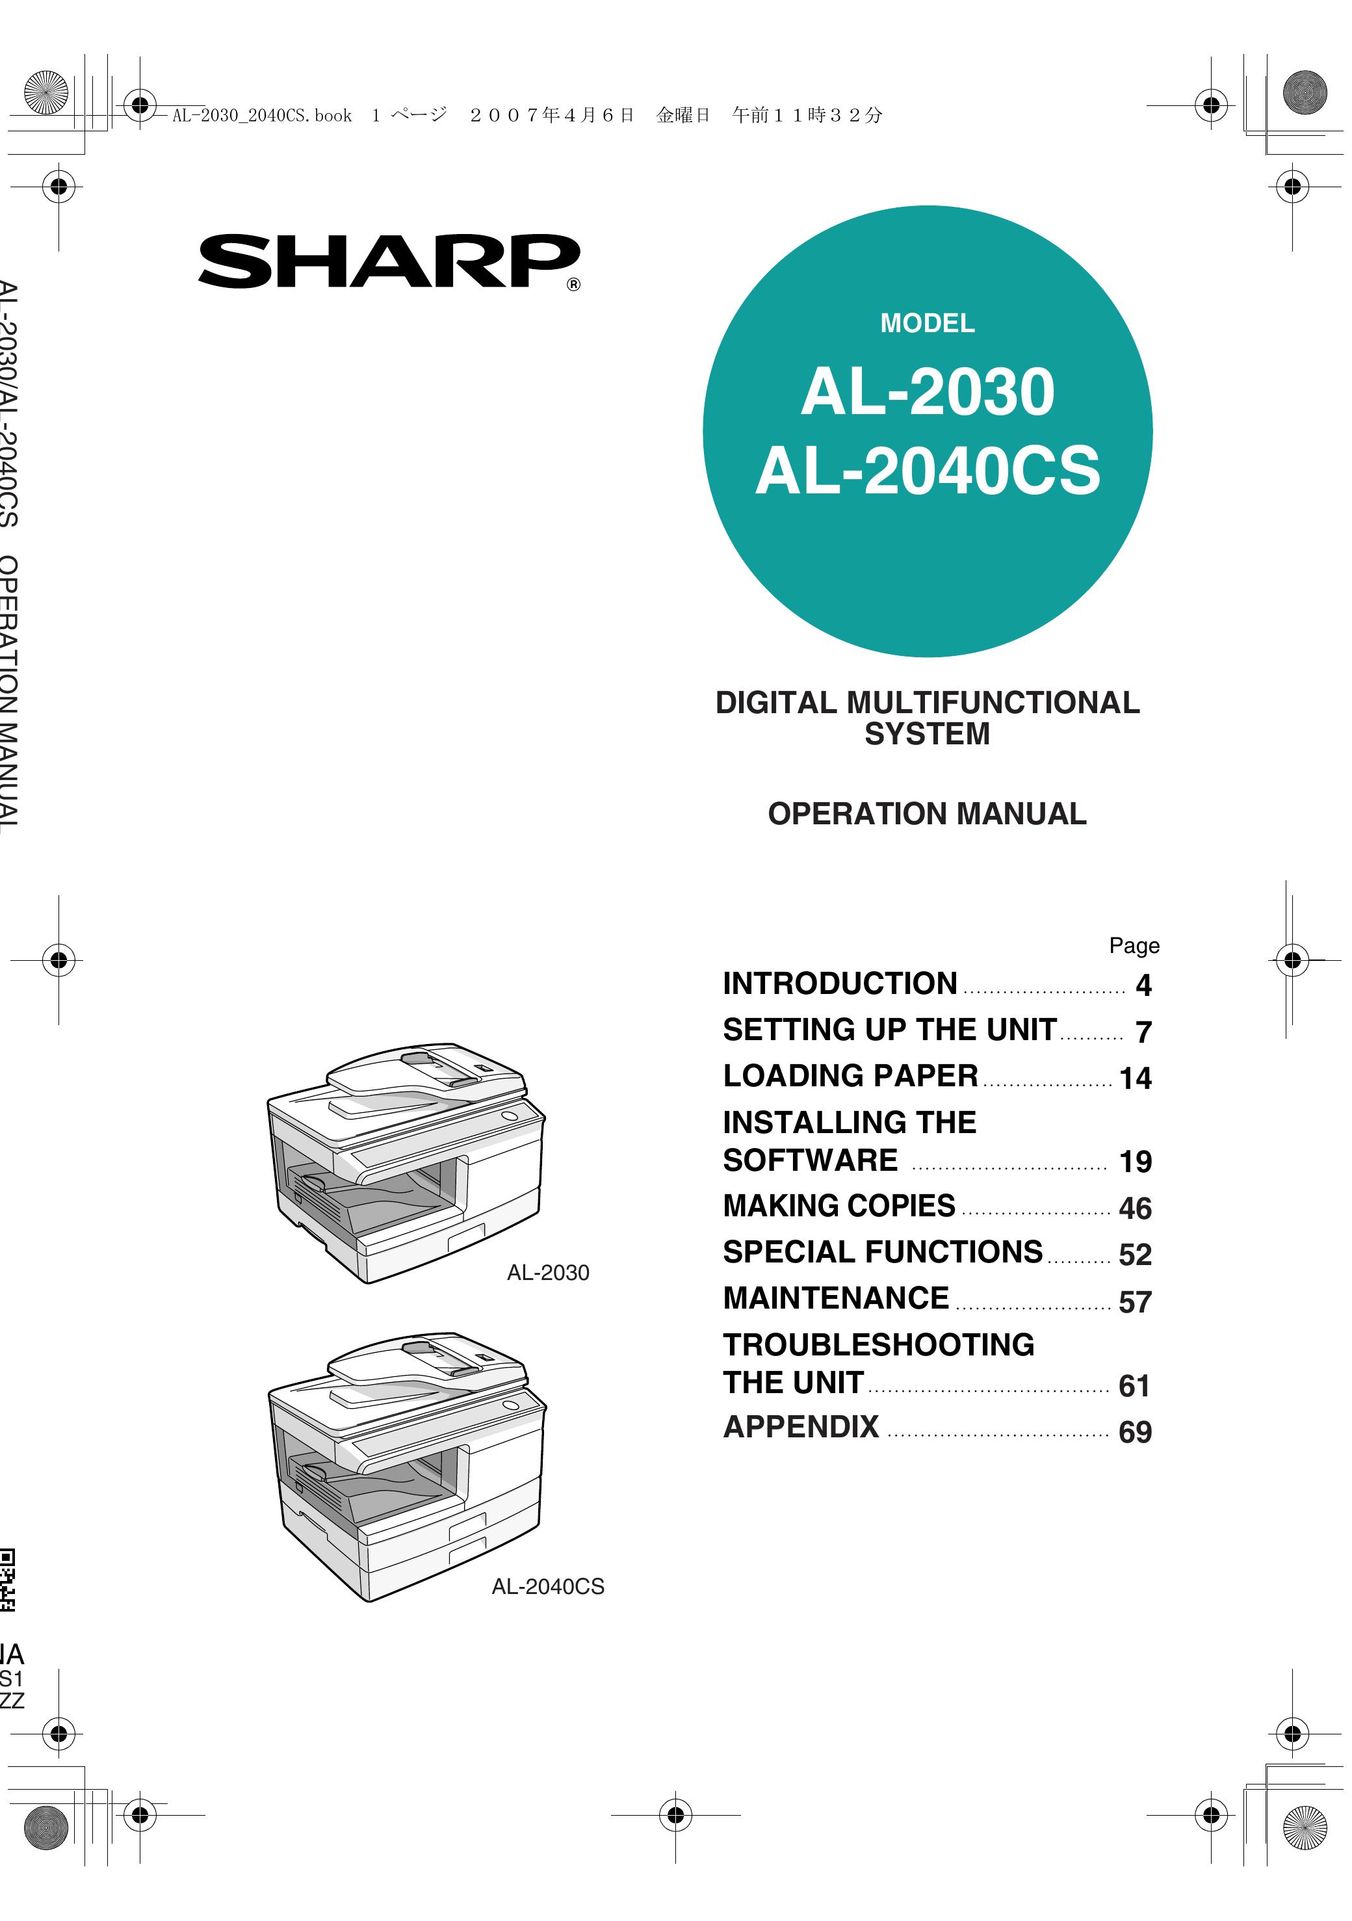 Sharp AL-2040CS All in One Printer User Manual